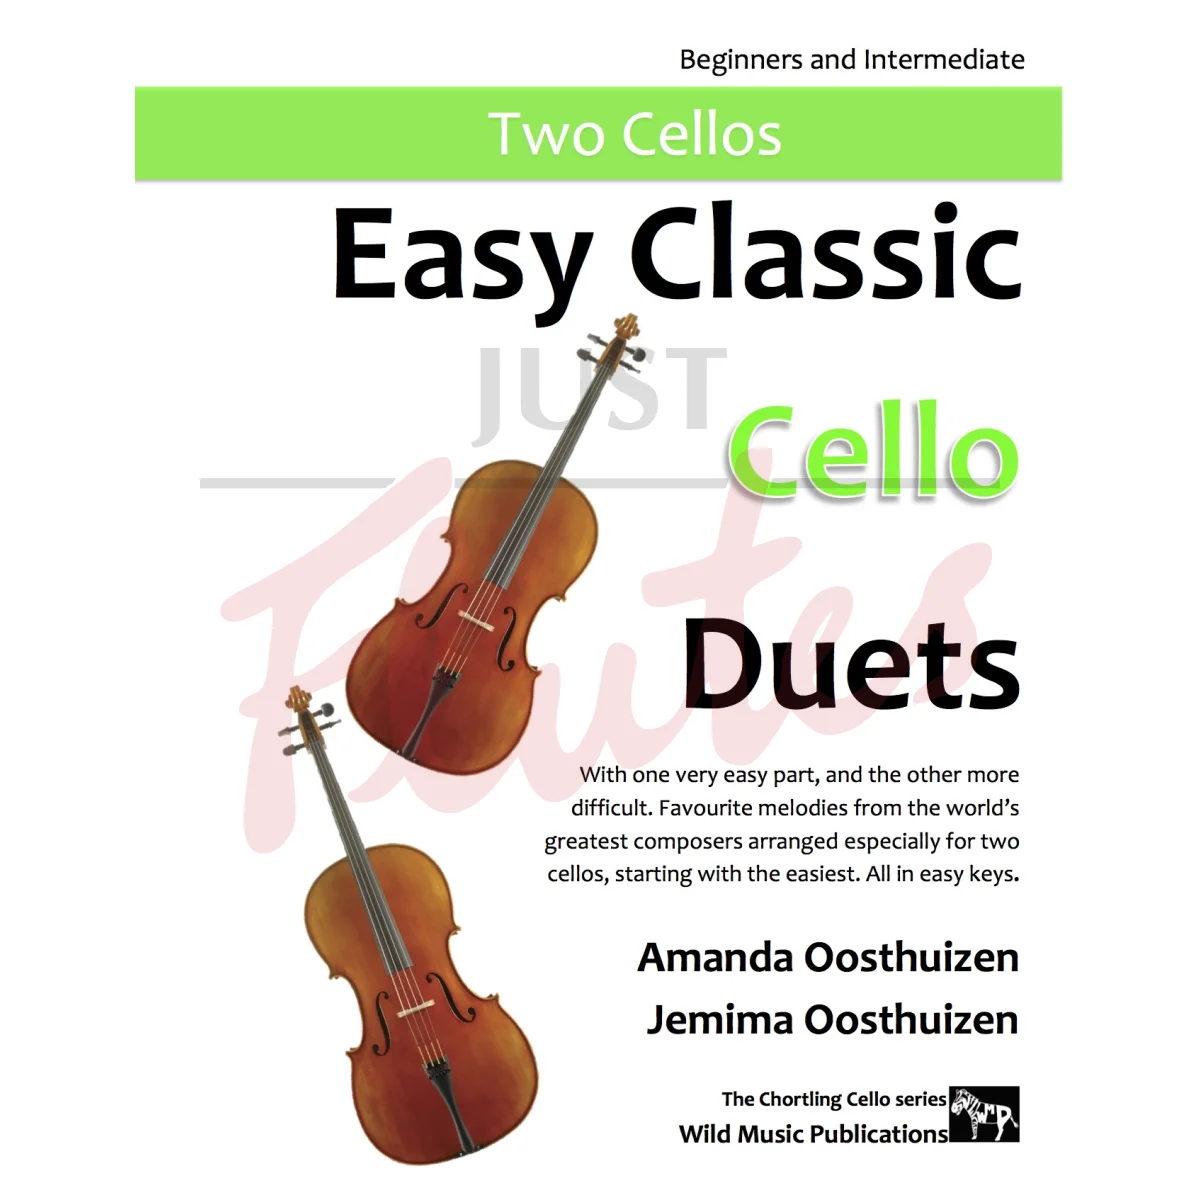 Easy Classic Cello Duets